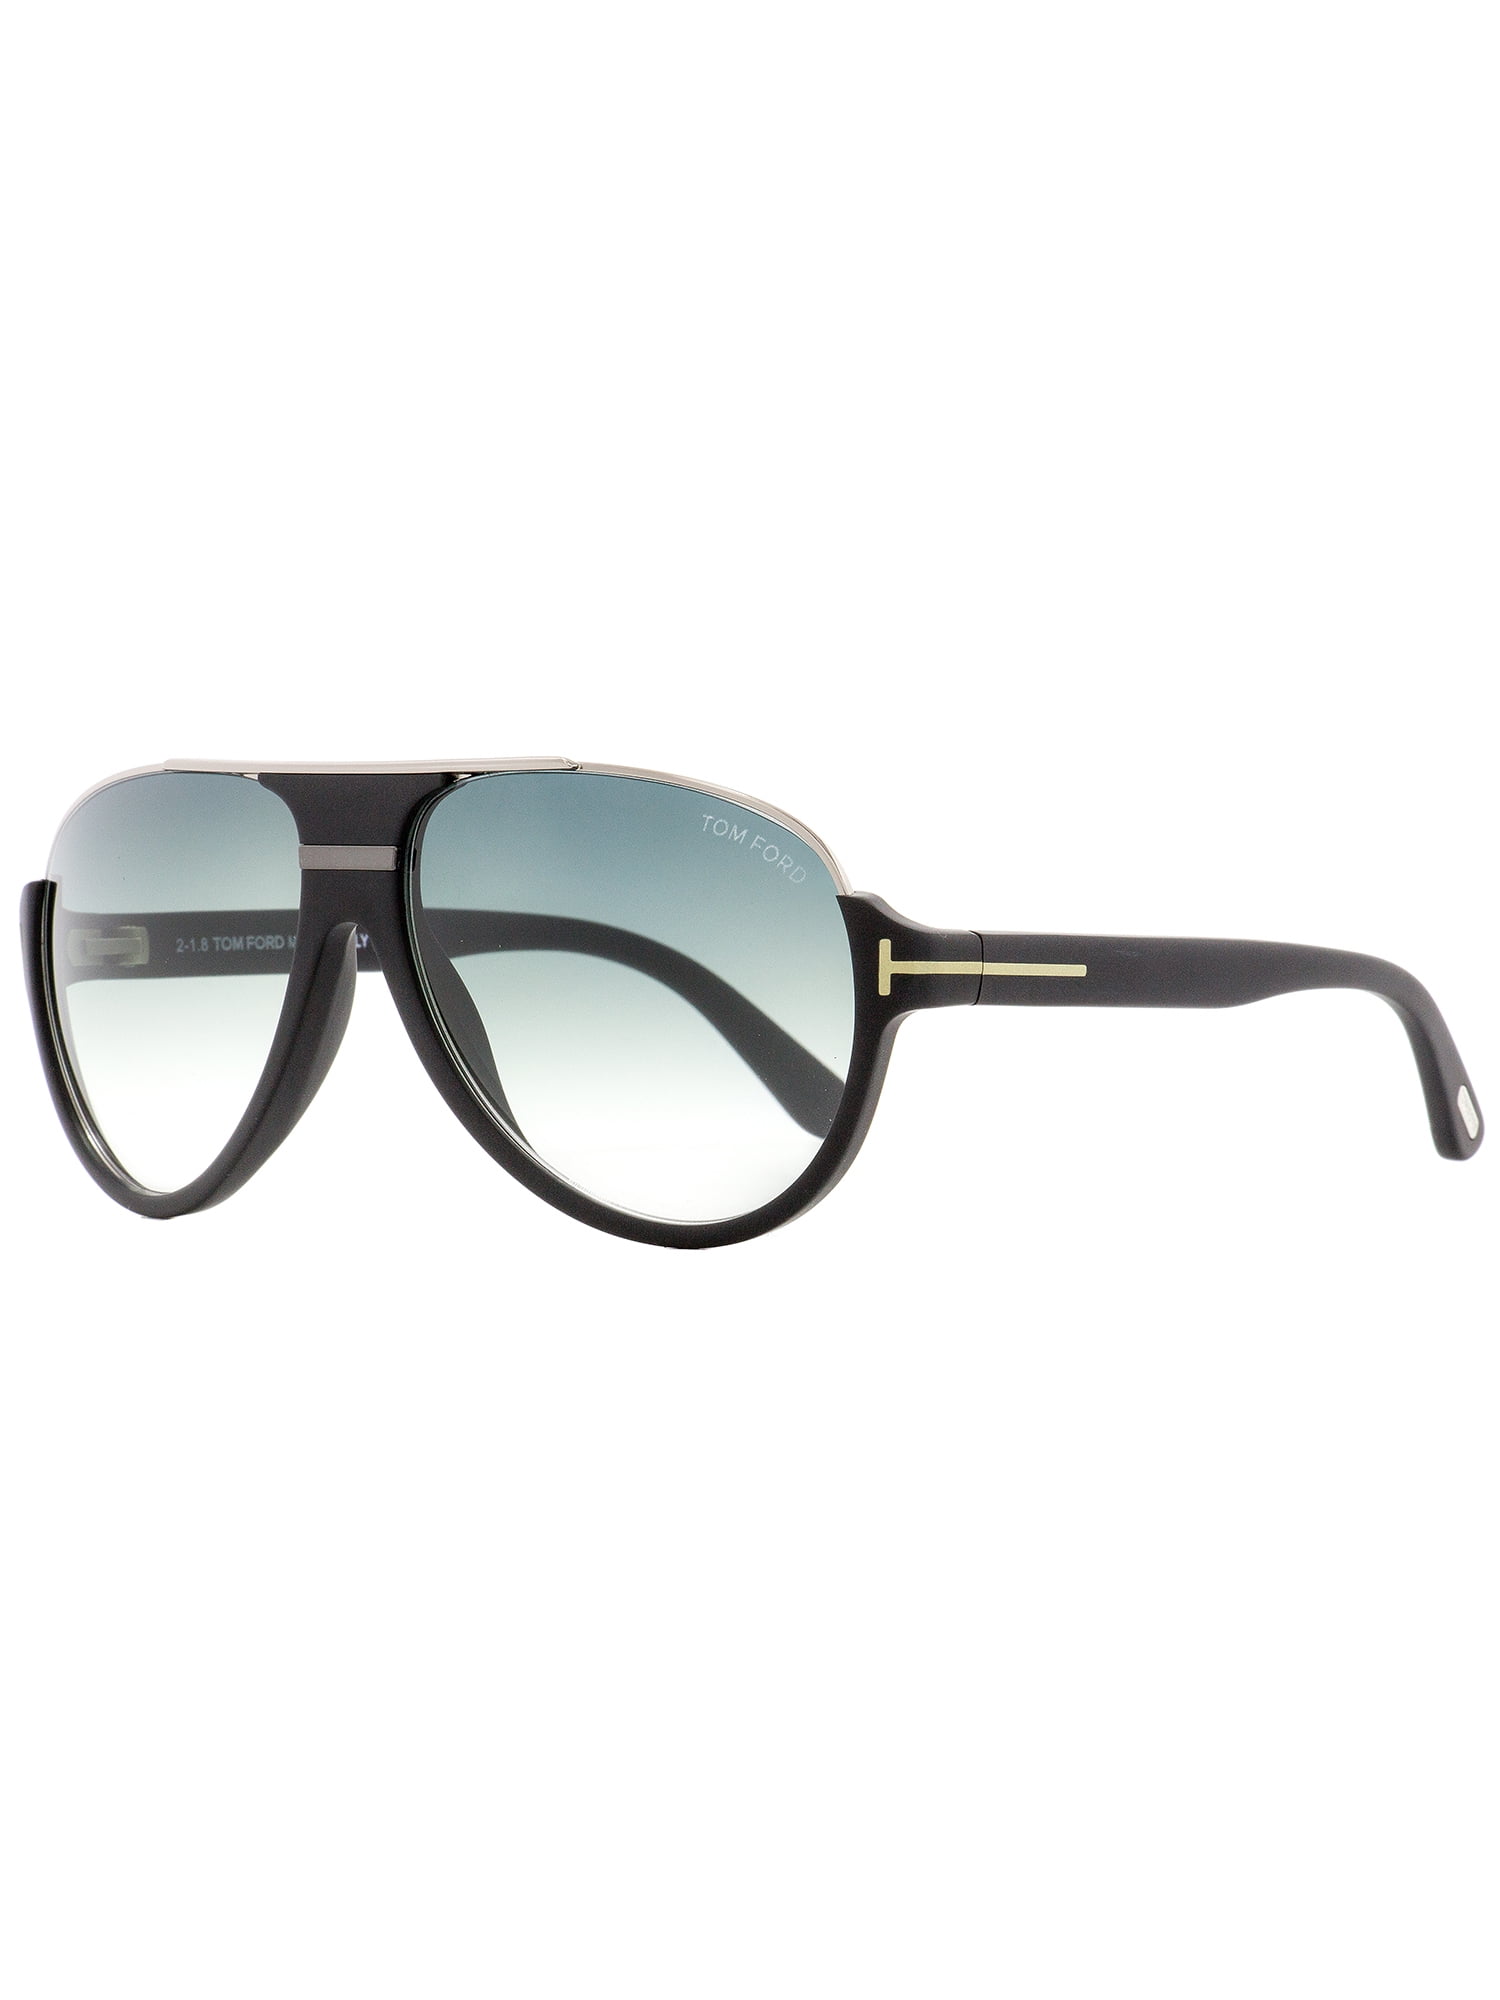 Men's Dimitry FT0334-02W-59 Black Aviator Sunglasses - Walmart.com